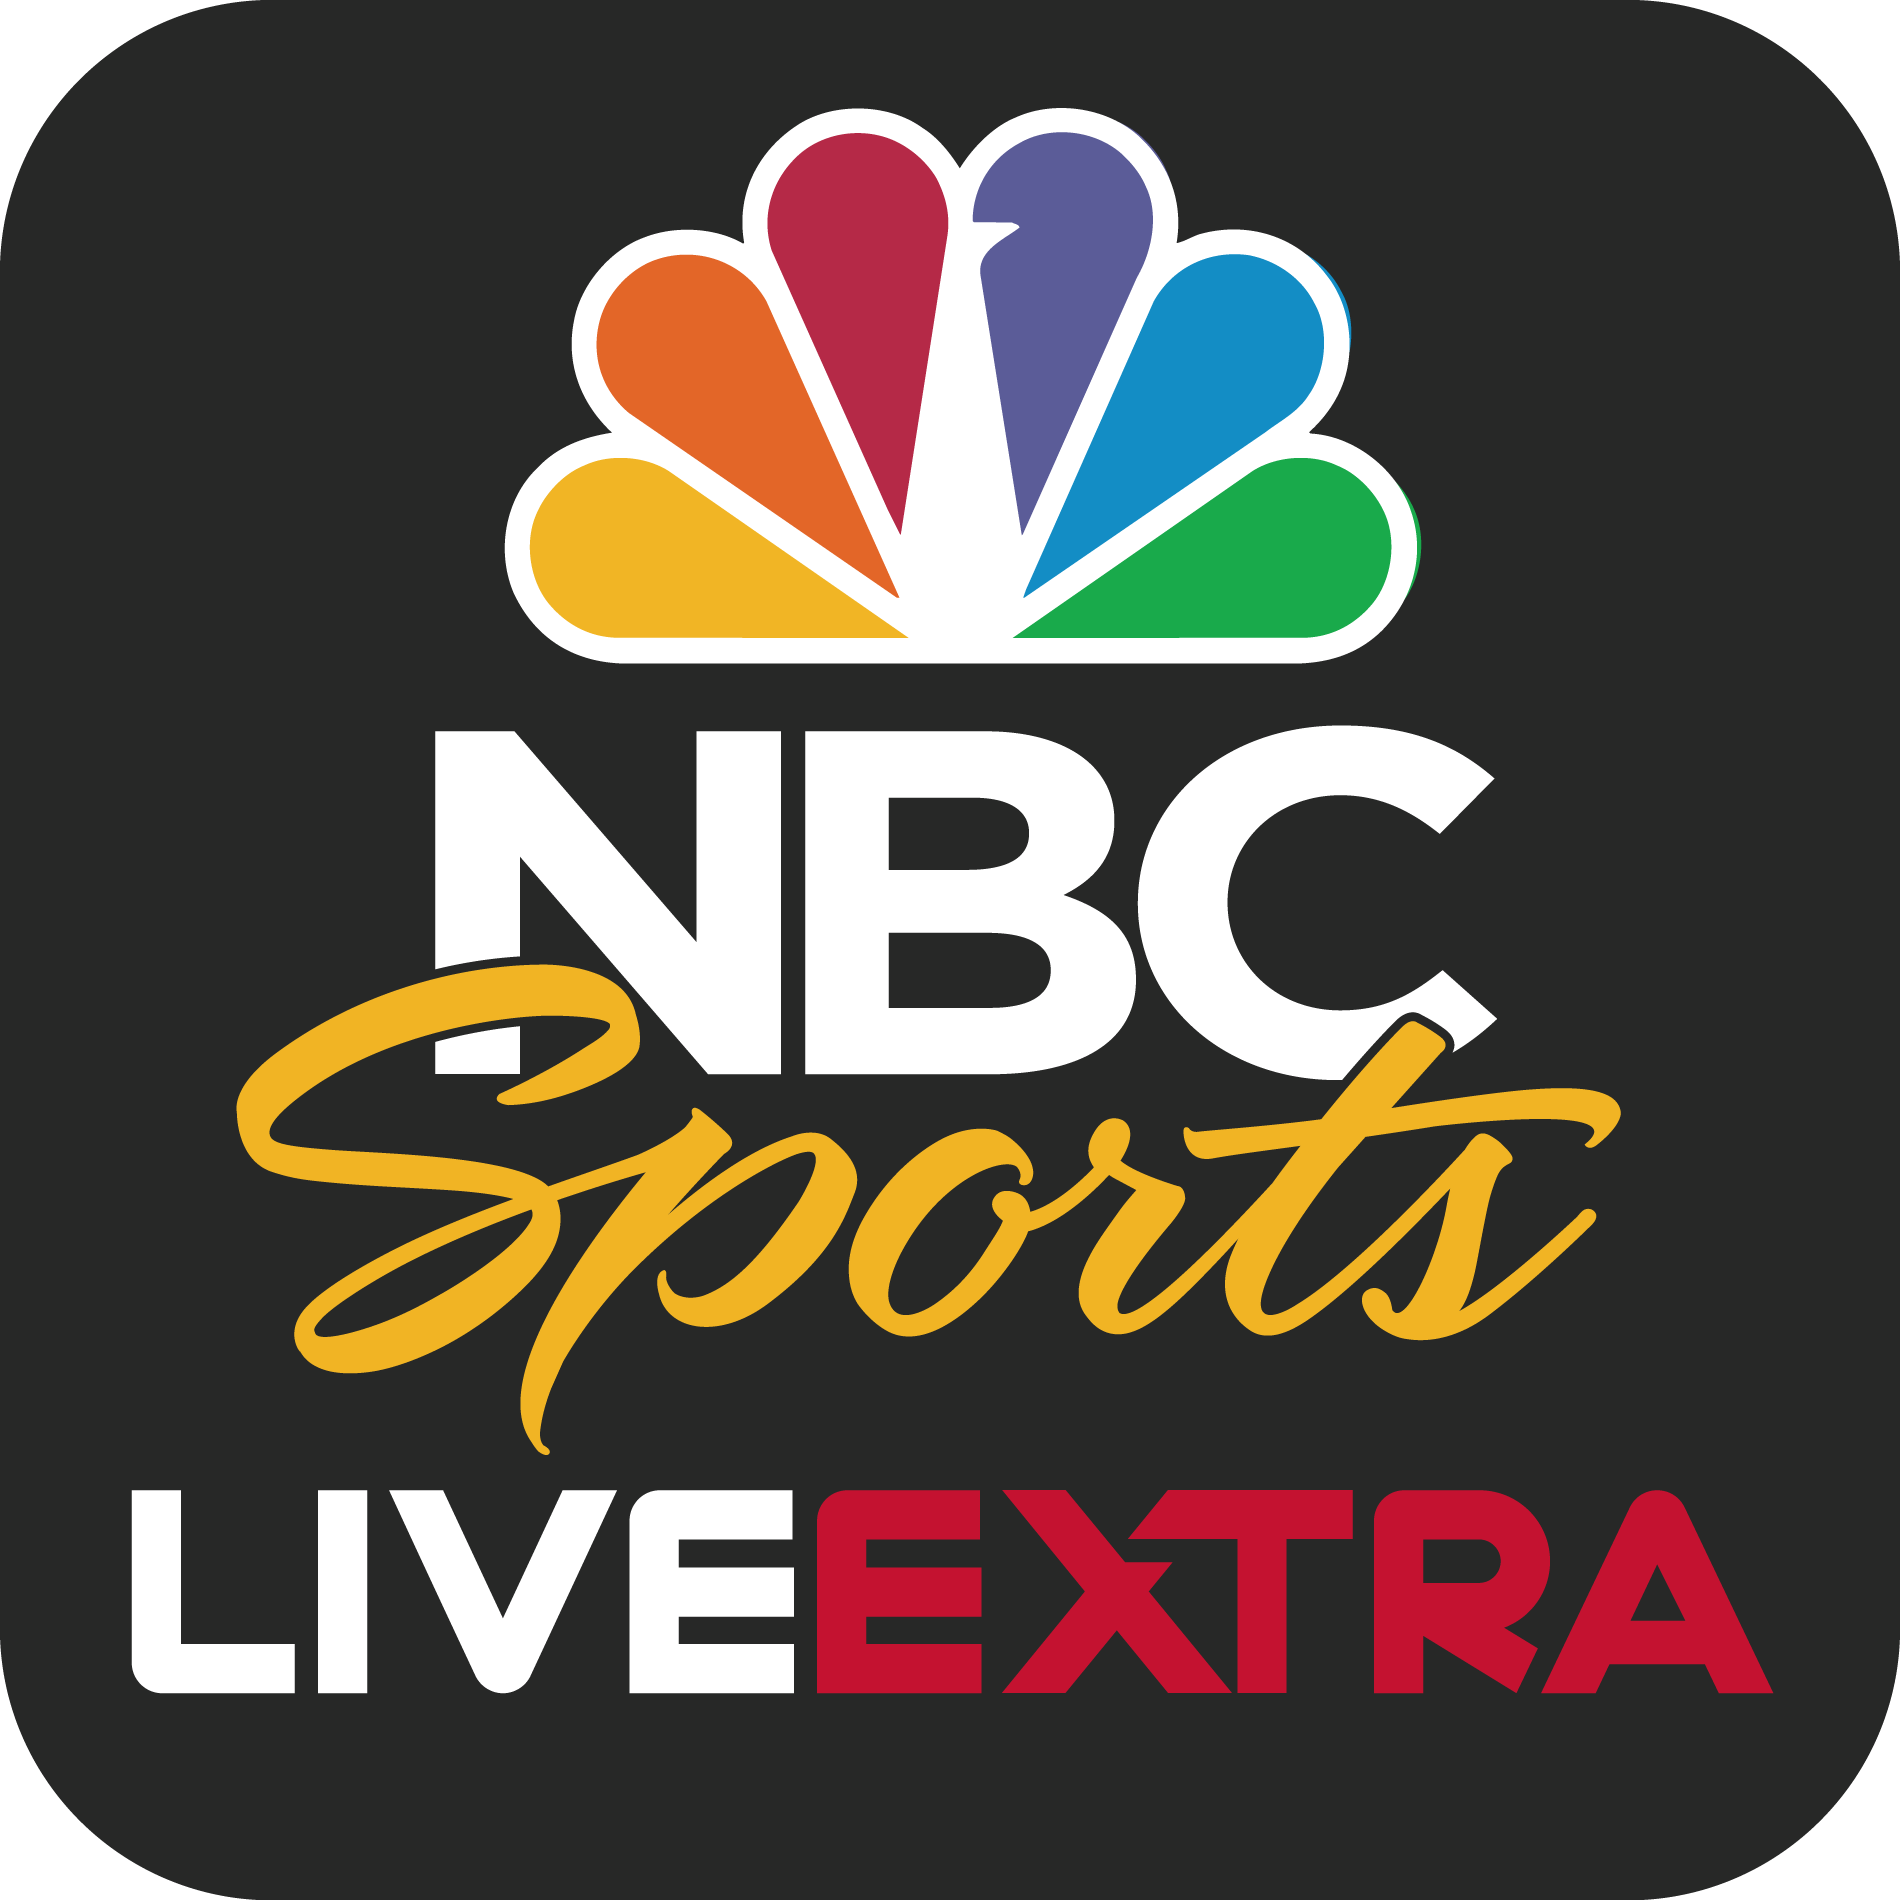 NBC SPORTS LIVE EXTRA/